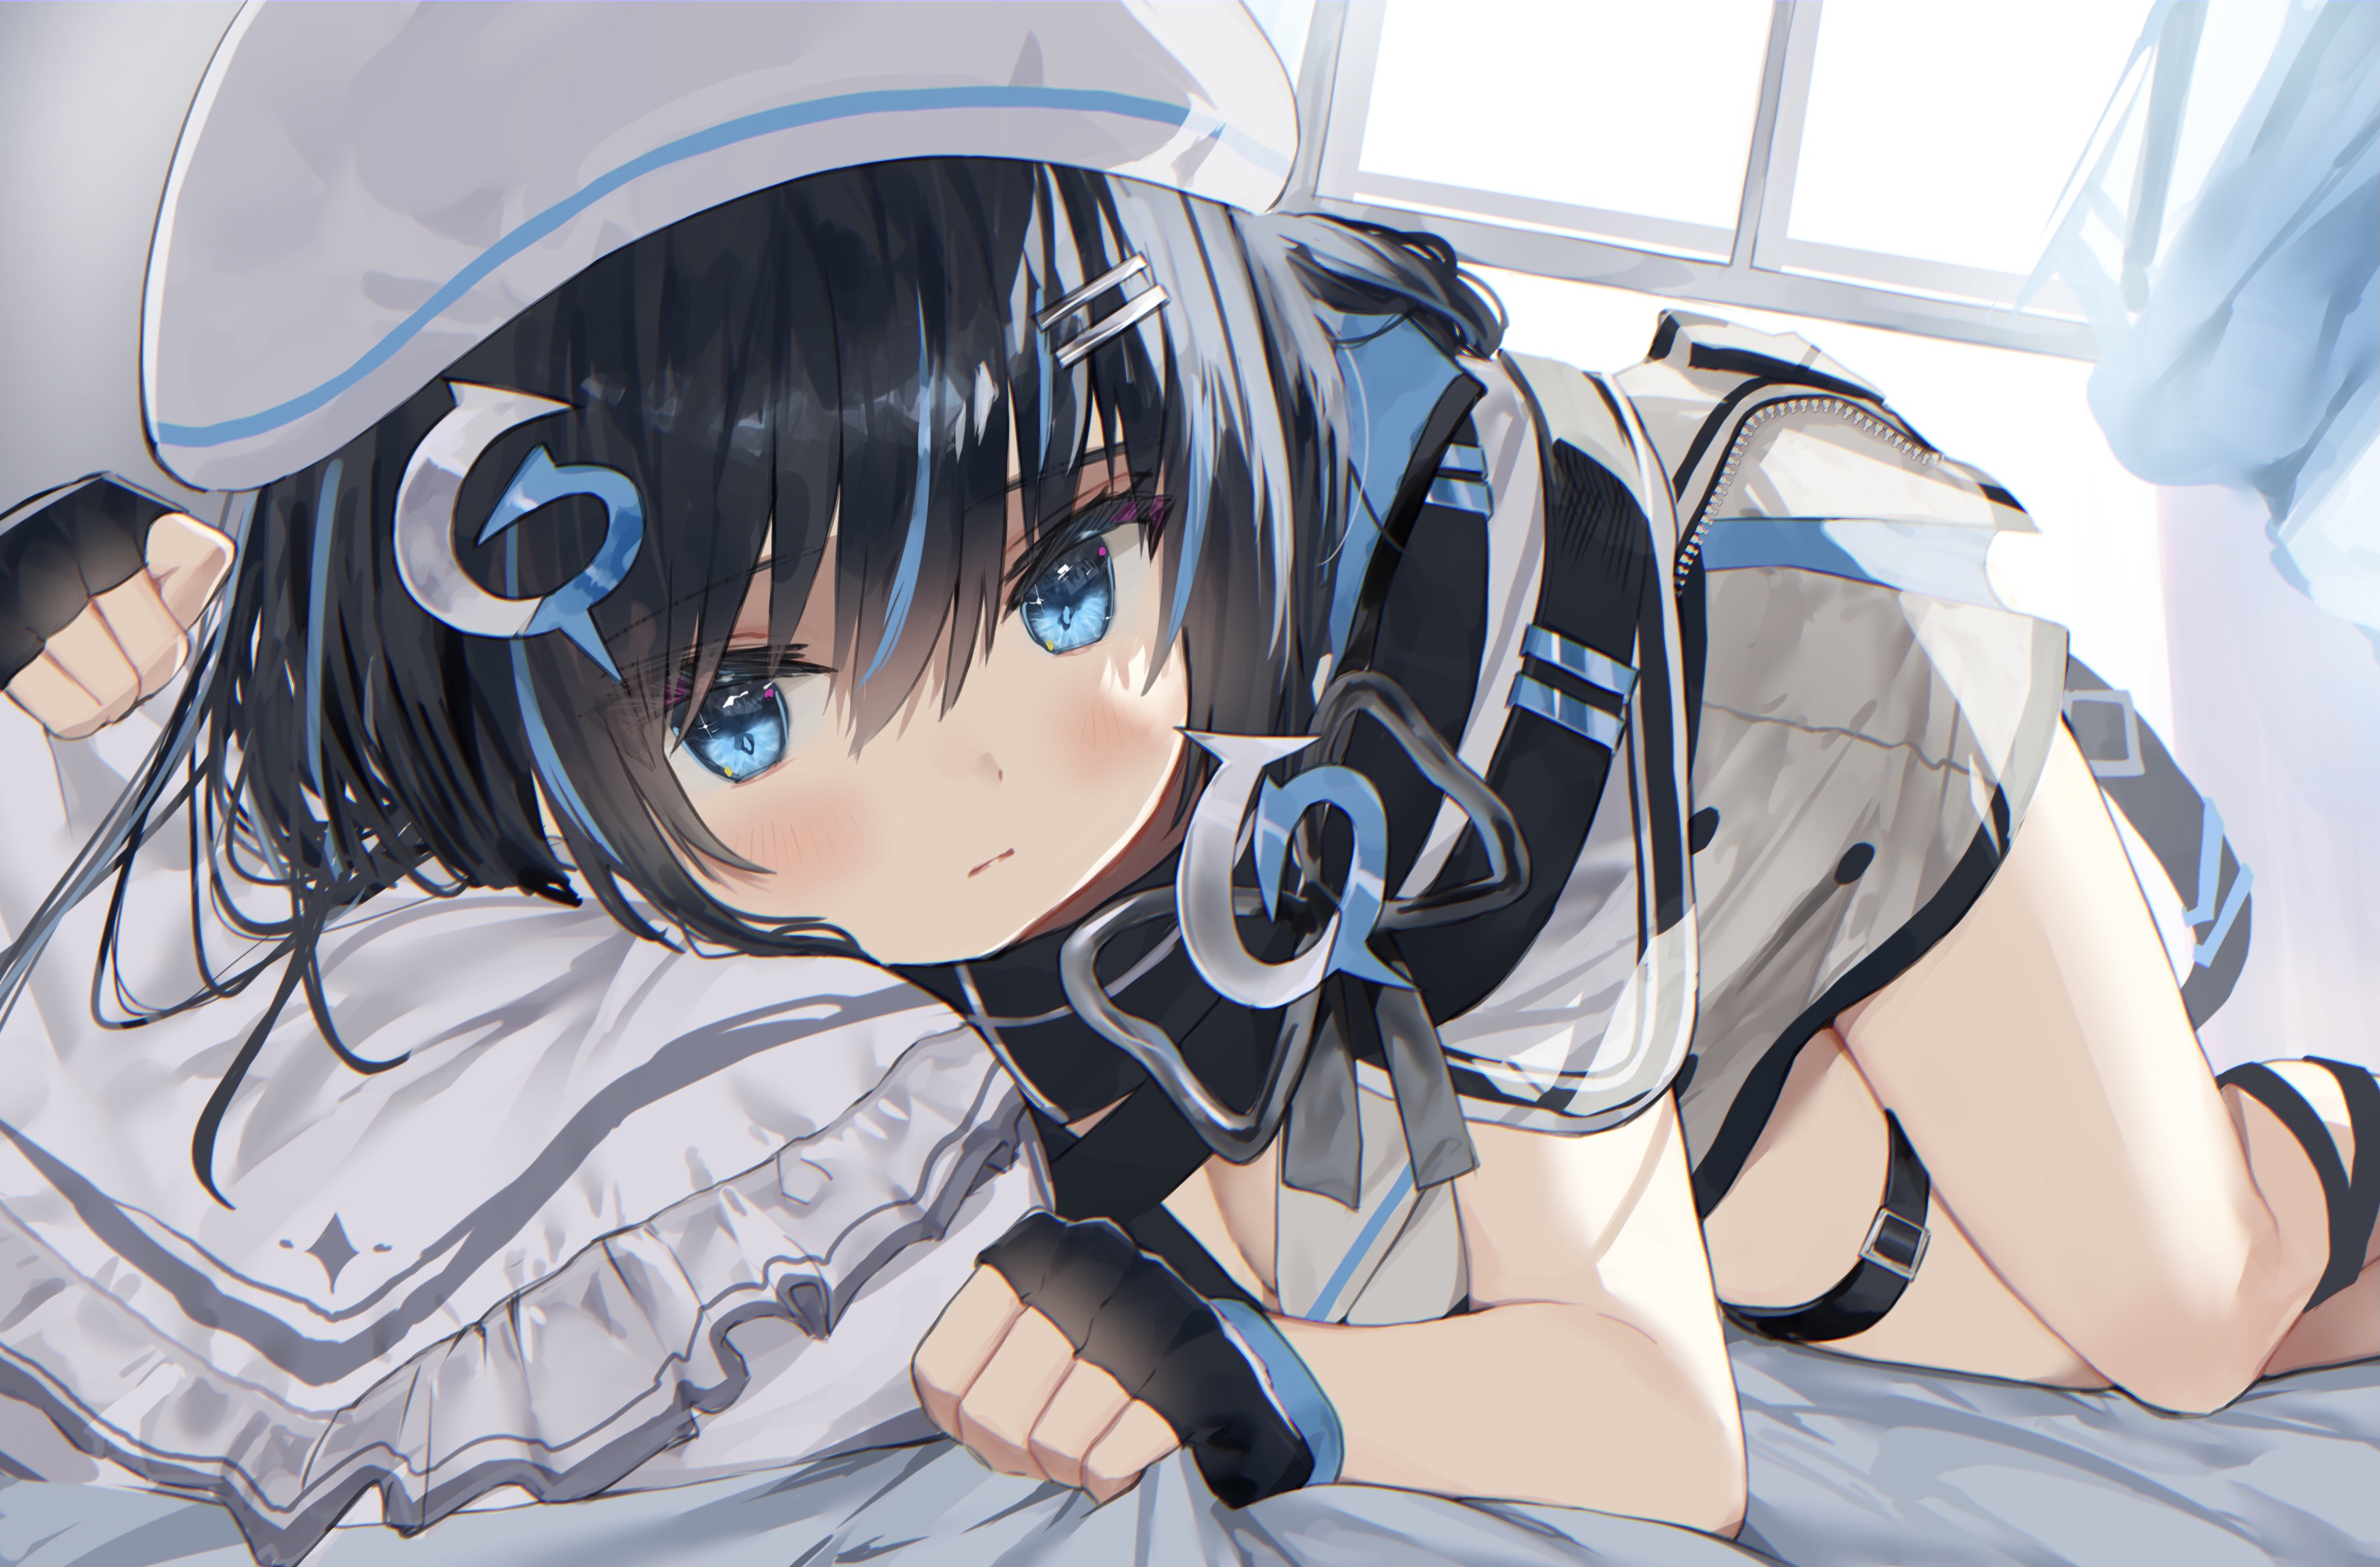 Anime Anime Girls Blue Eyes Black Hair Hat Women With Hats Legs Together In Bed MashiroKta Artwork 3491x2299